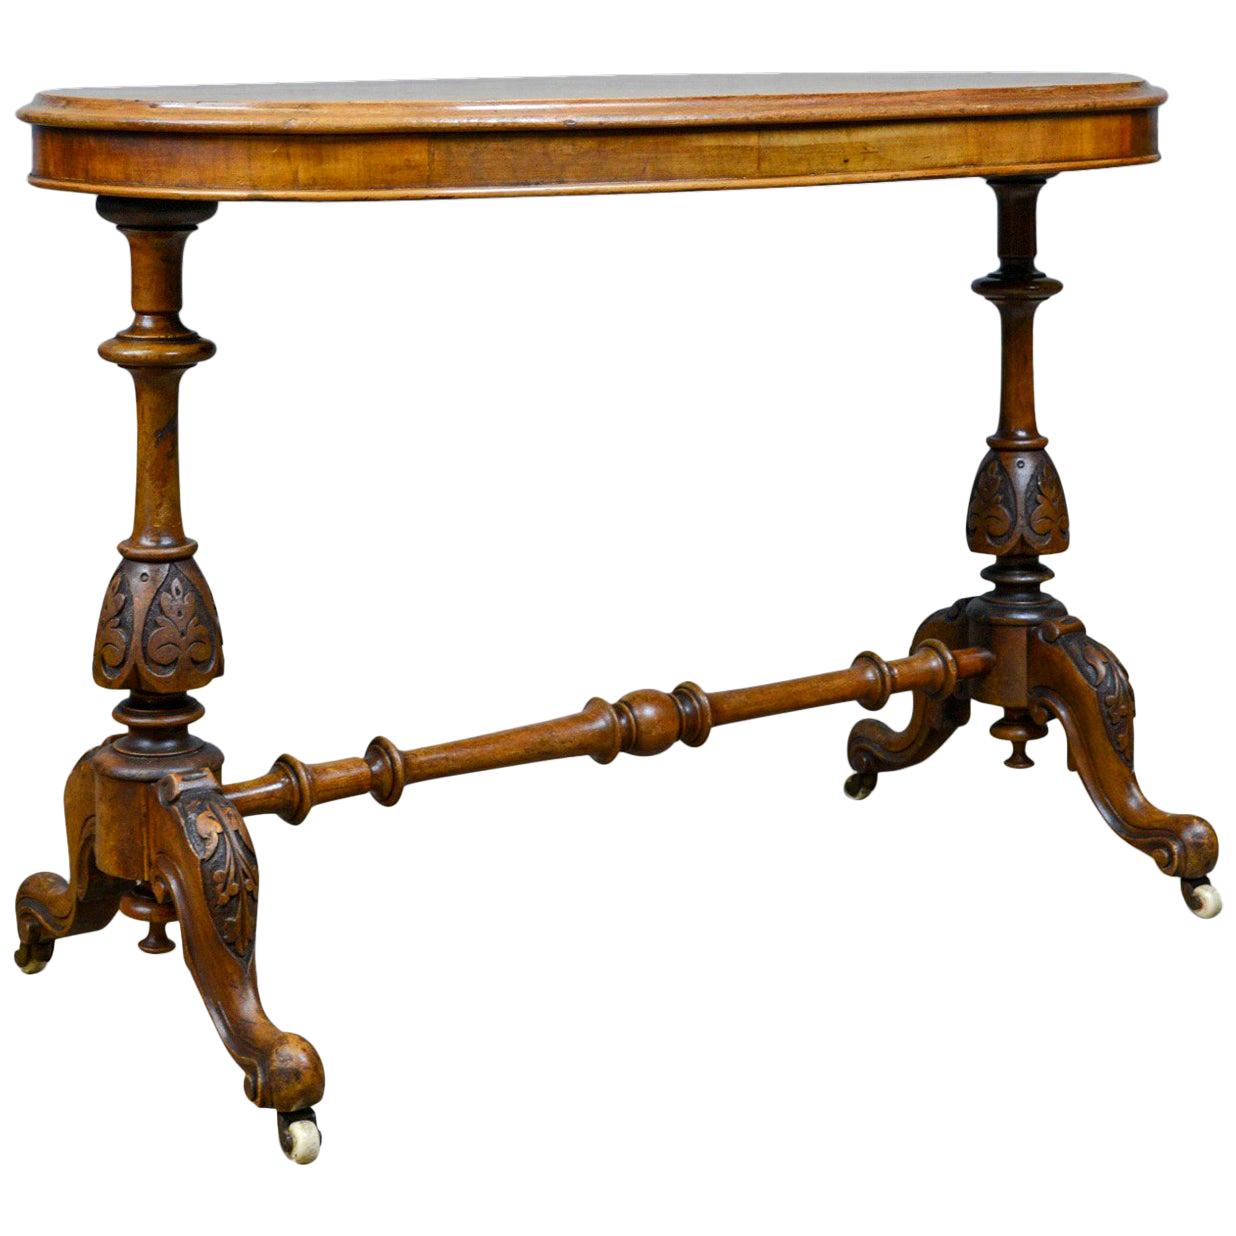 Antique Stretcher Table, Burr Walnut, English, Victorian, Oval, Side, Tea